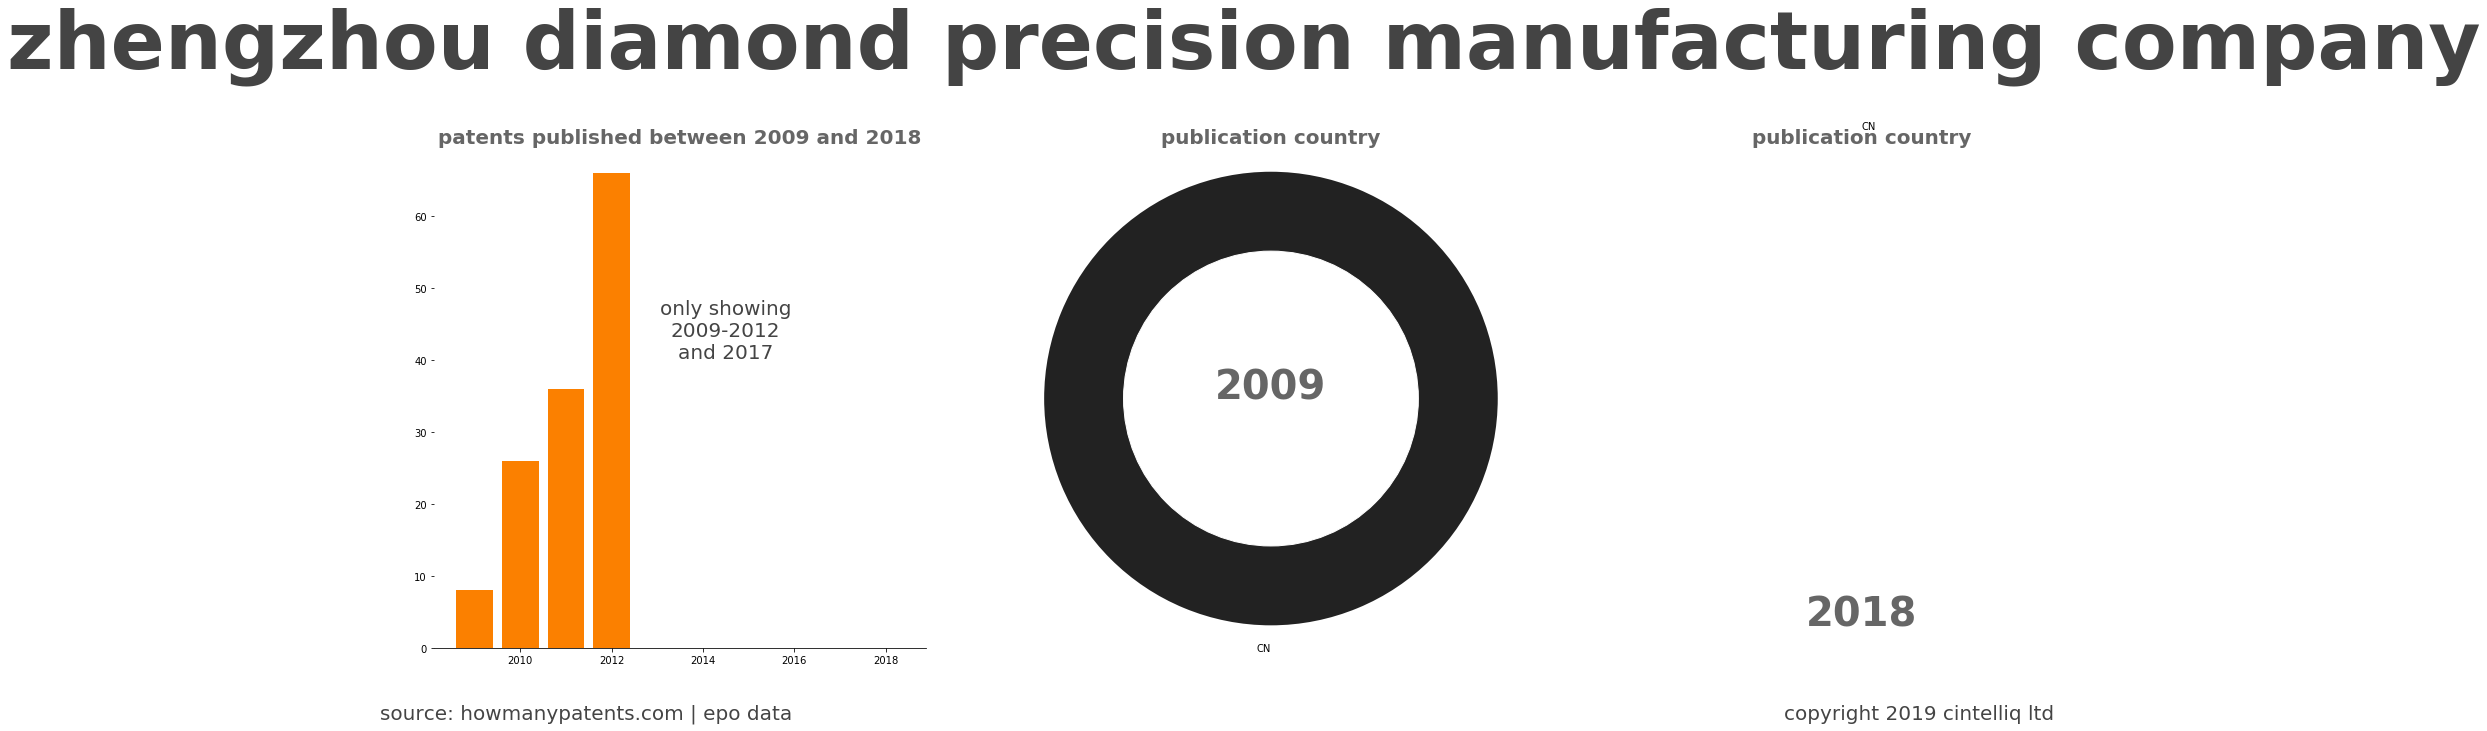 summary of patents for Zhengzhou Diamond Precision Manufacturing Company